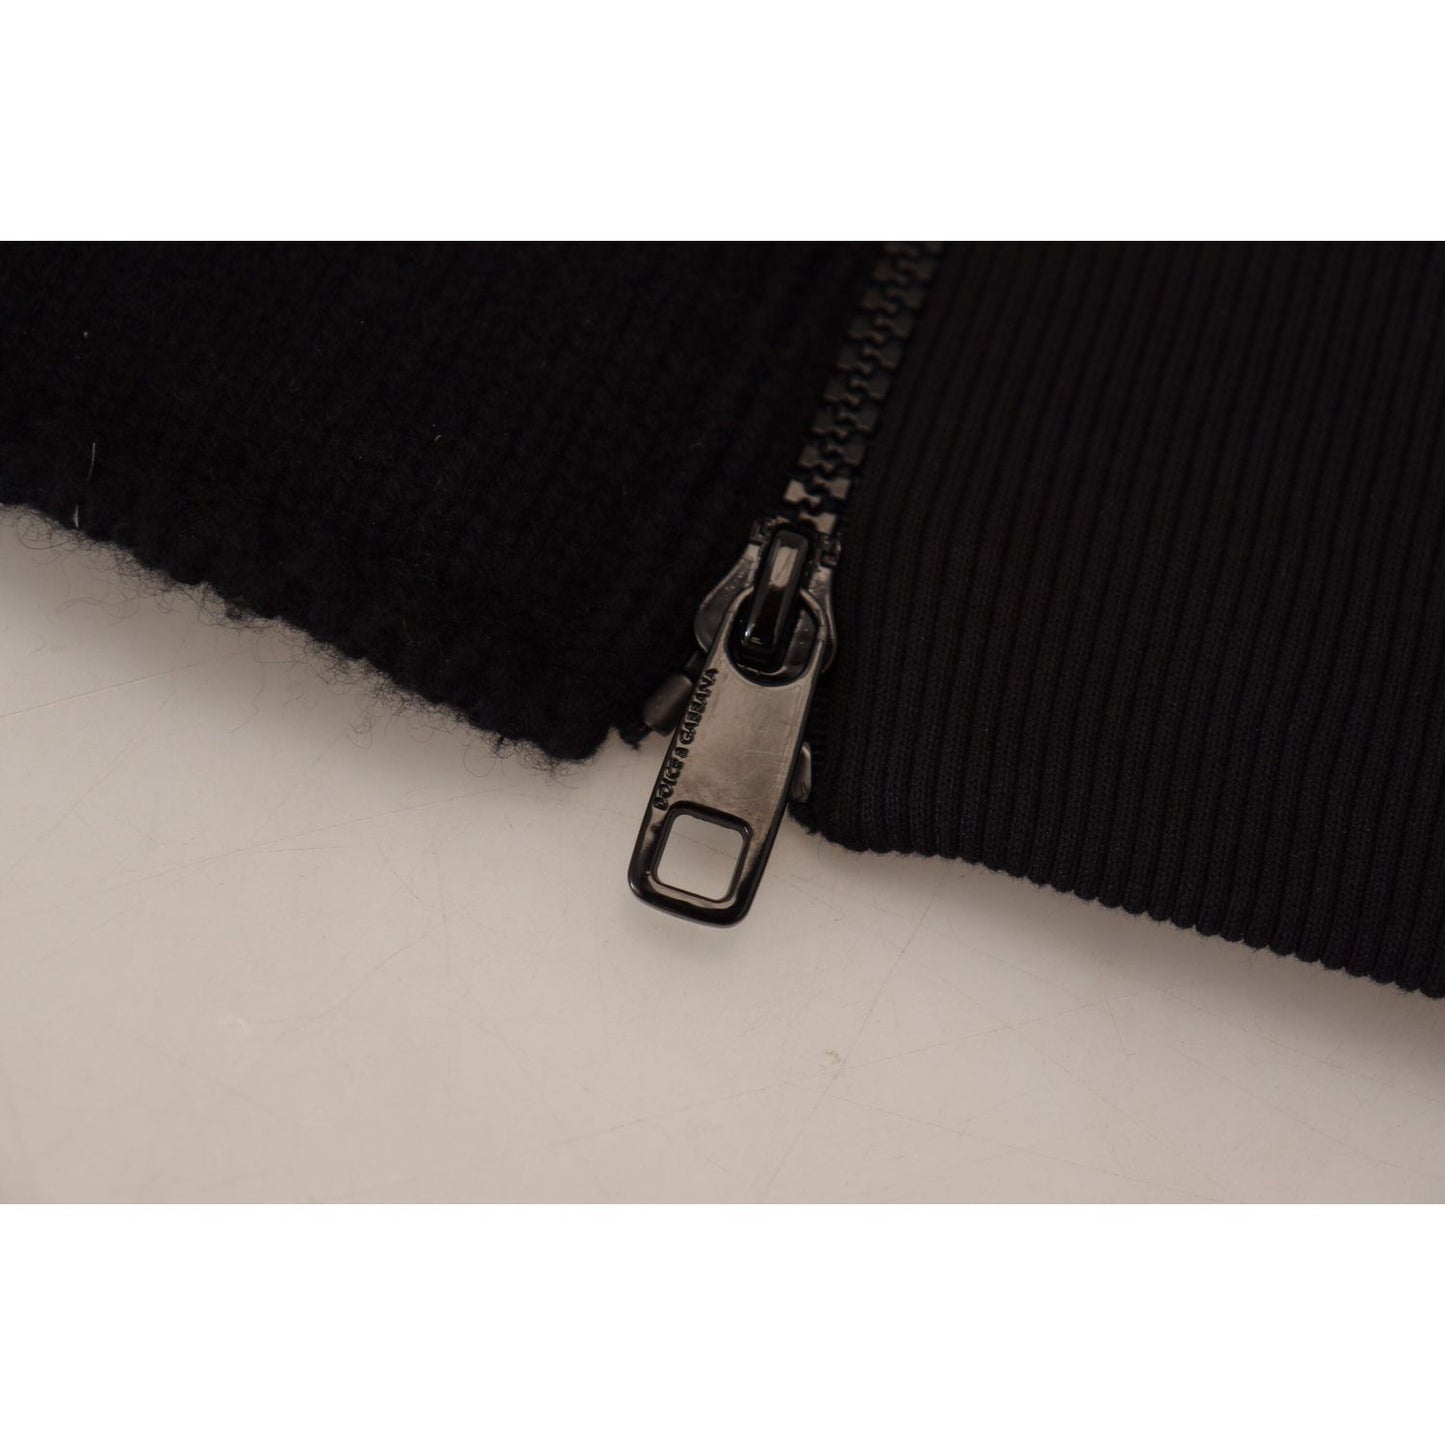 Dolce & GabbanaElegant Black Pullover SweaterMcRichard Designer Brands£1179.00